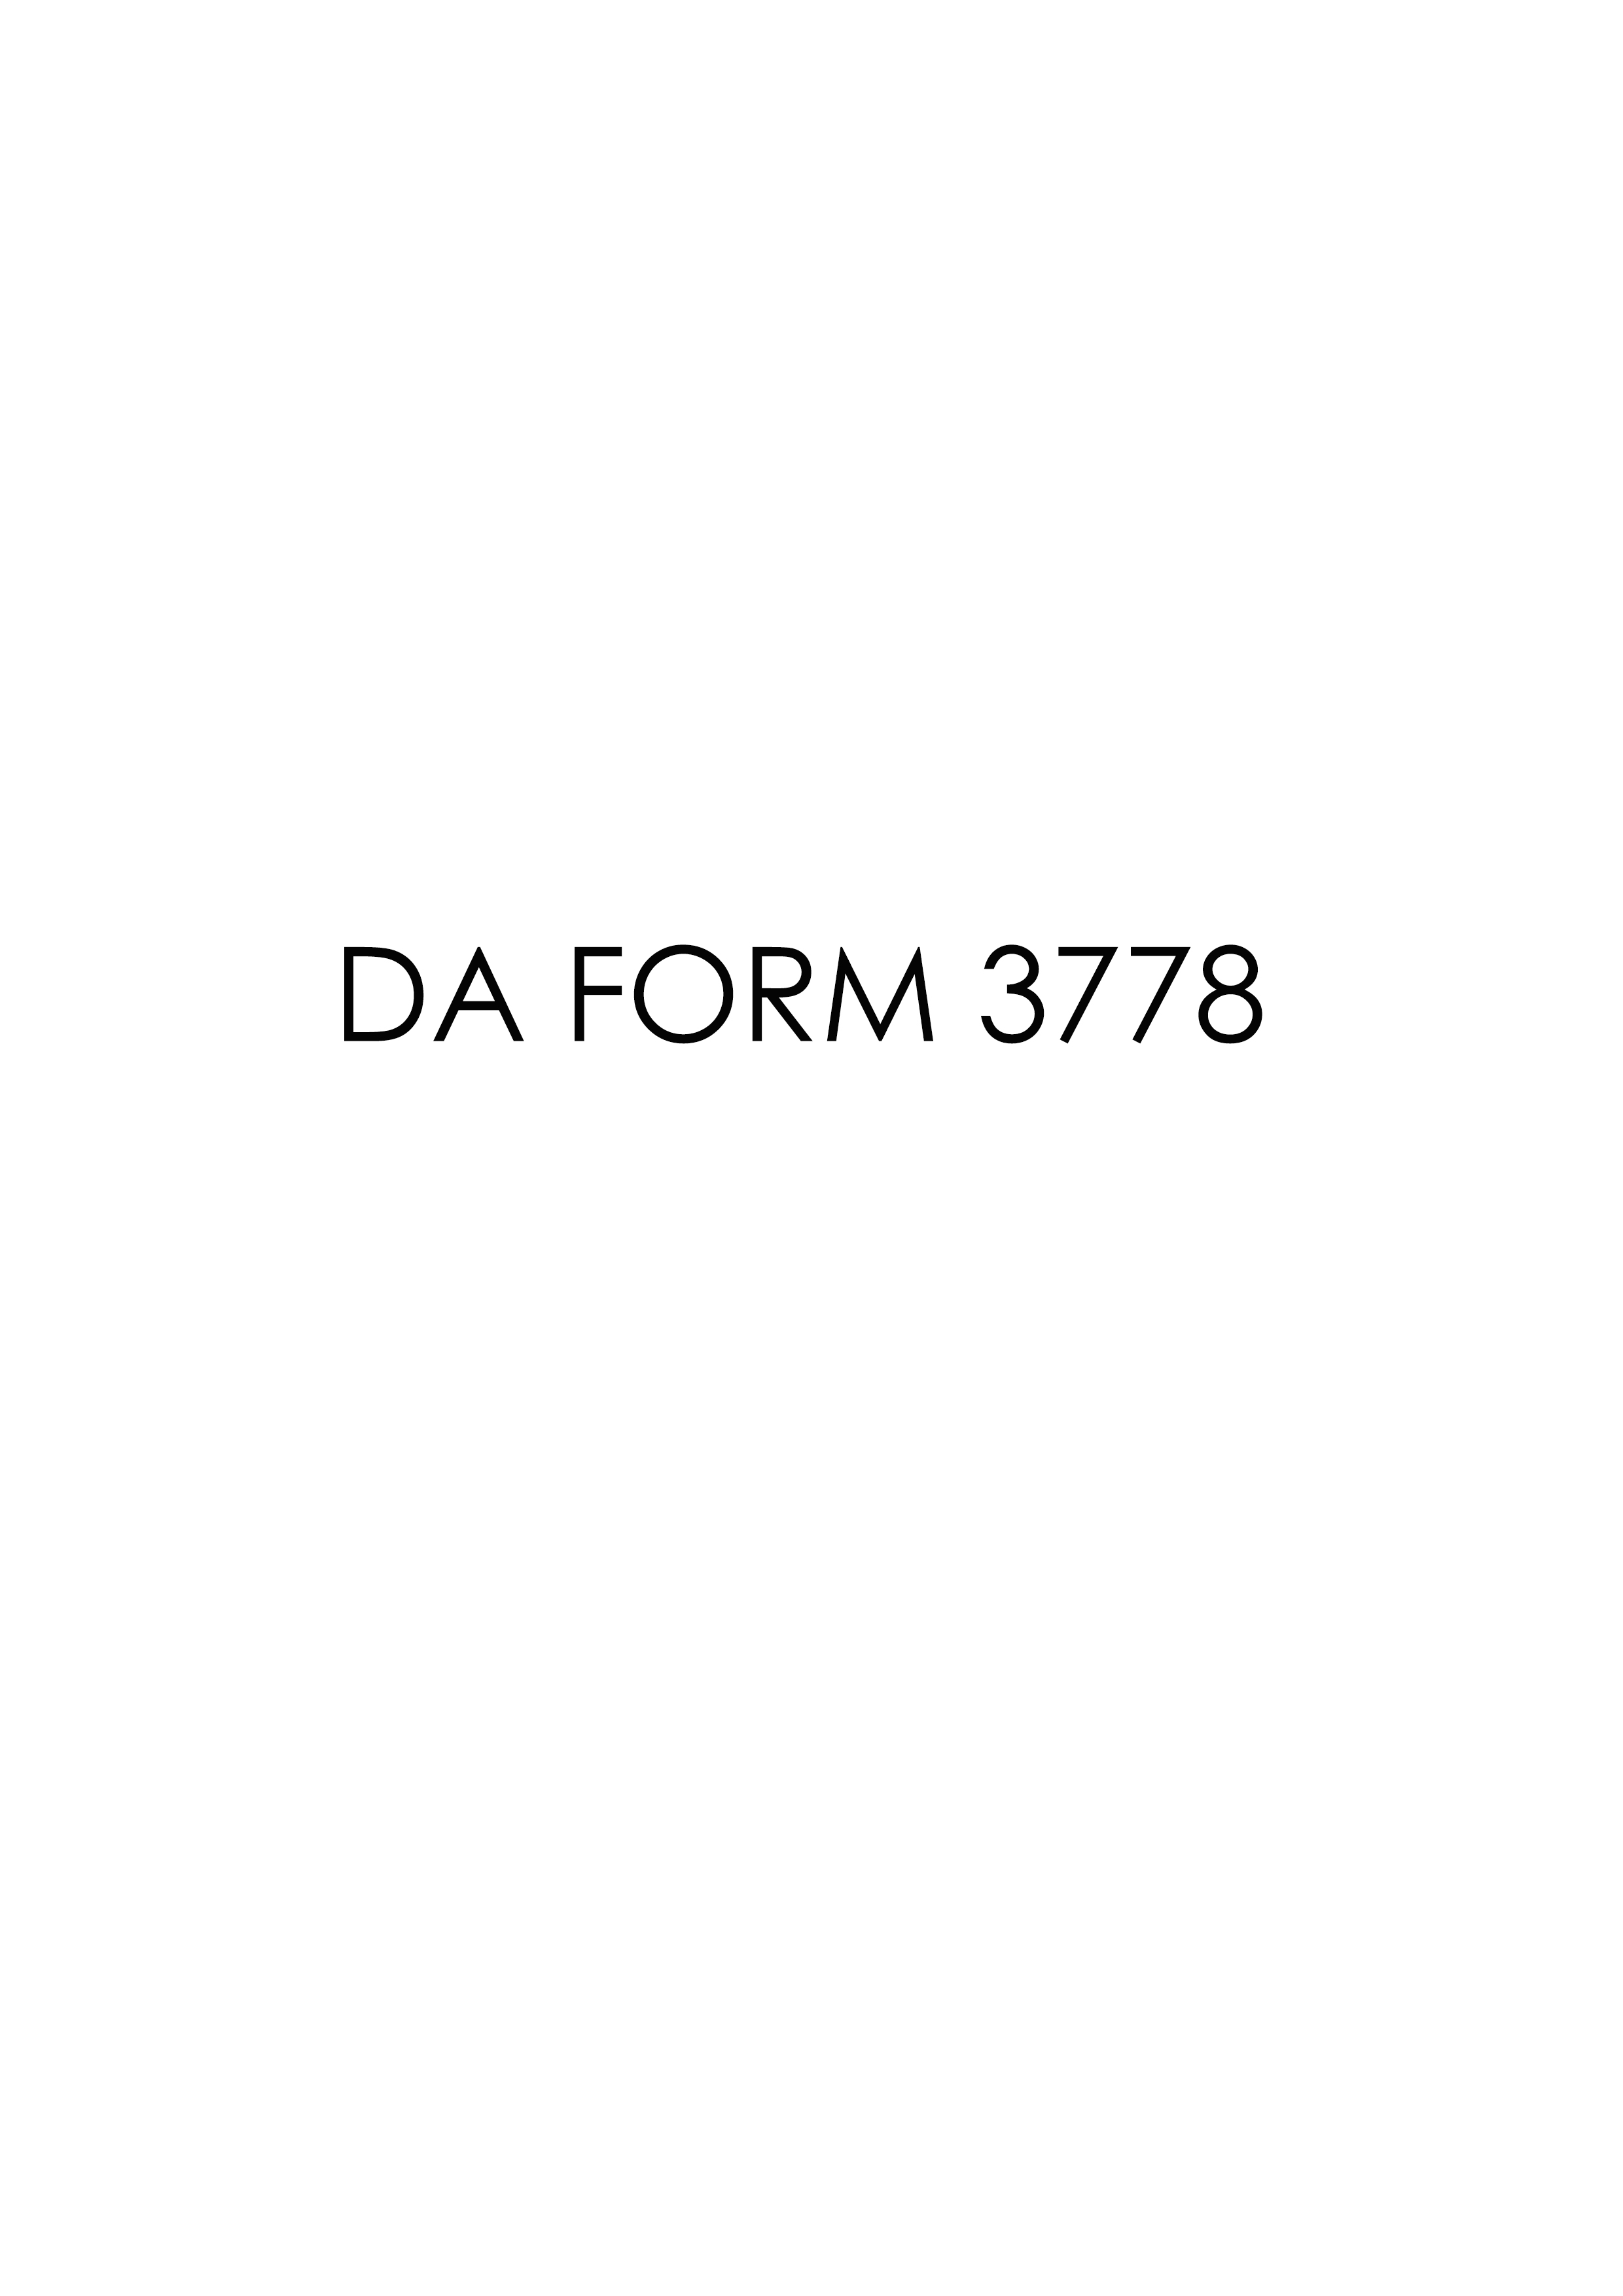 da Form 3778 fillable